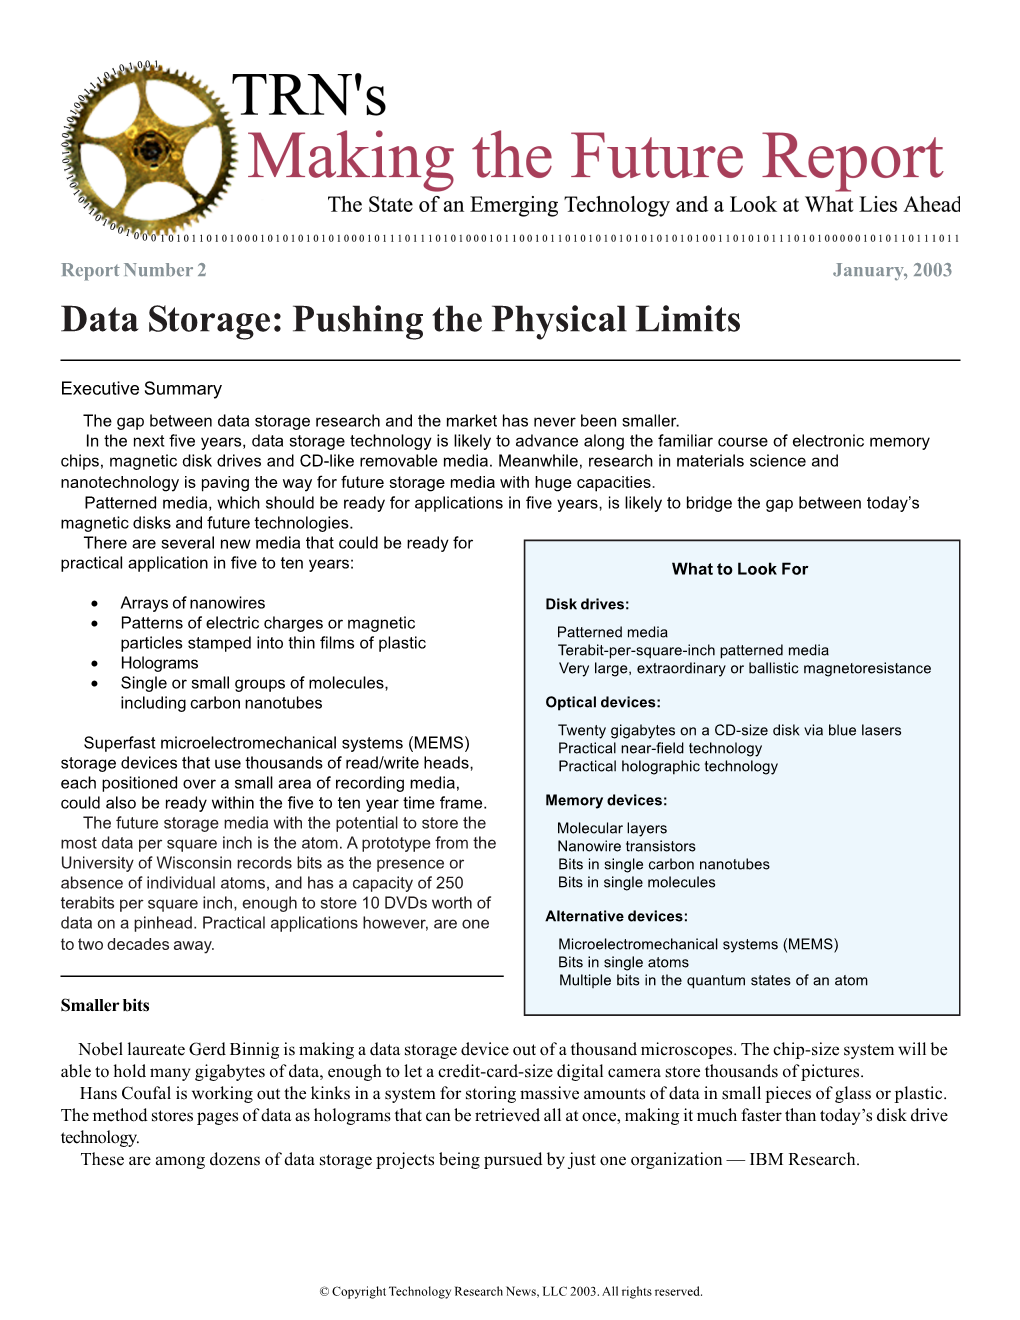 Data Storage: Pushing the Physical Limits